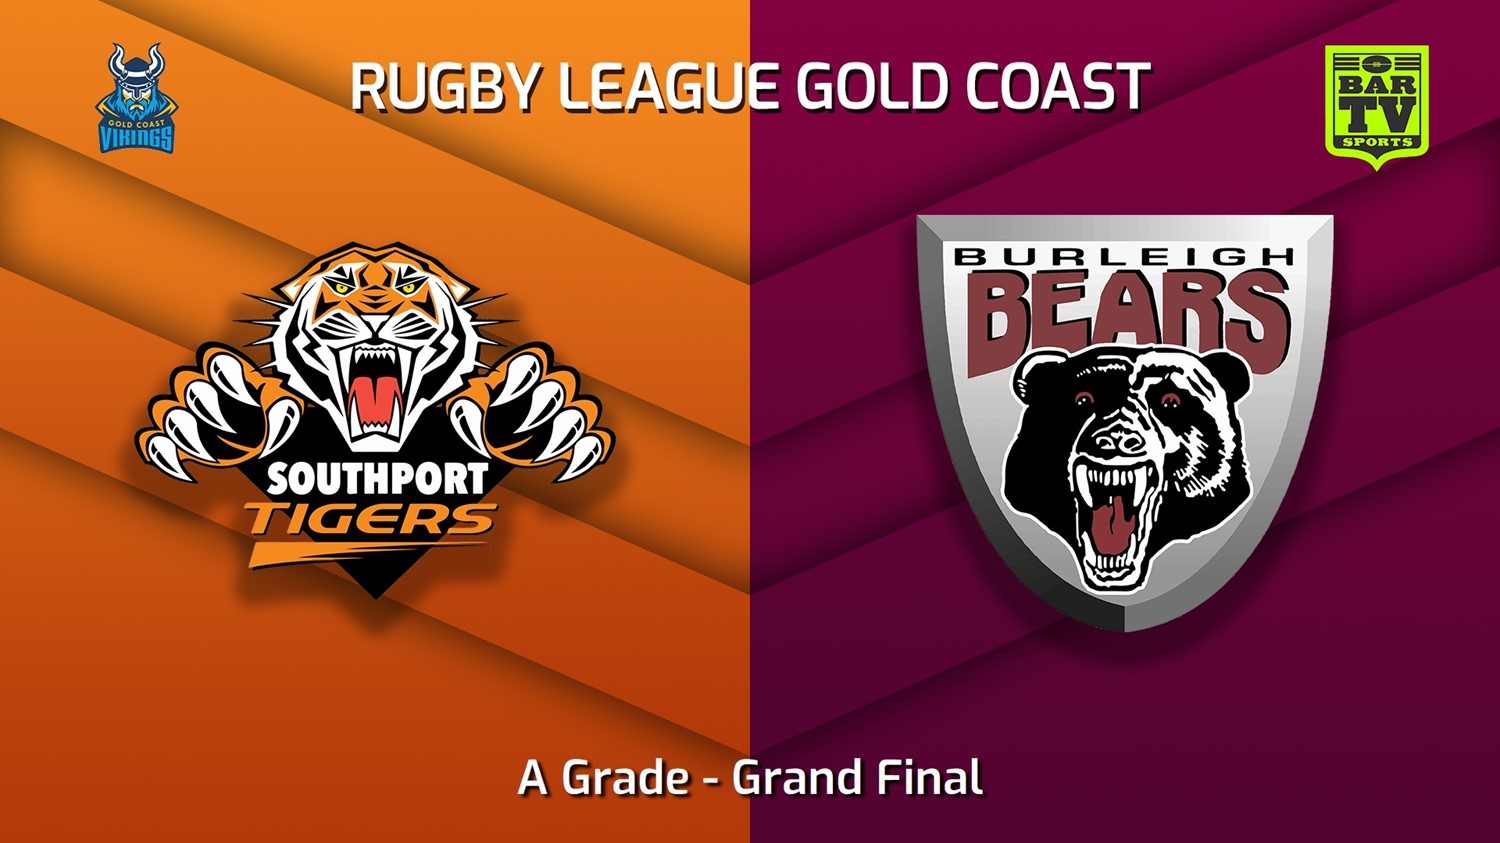 220917-Gold Coast Grand Final - A Grade - Southport Tigers v Burleigh Bears Minigame Slate Image